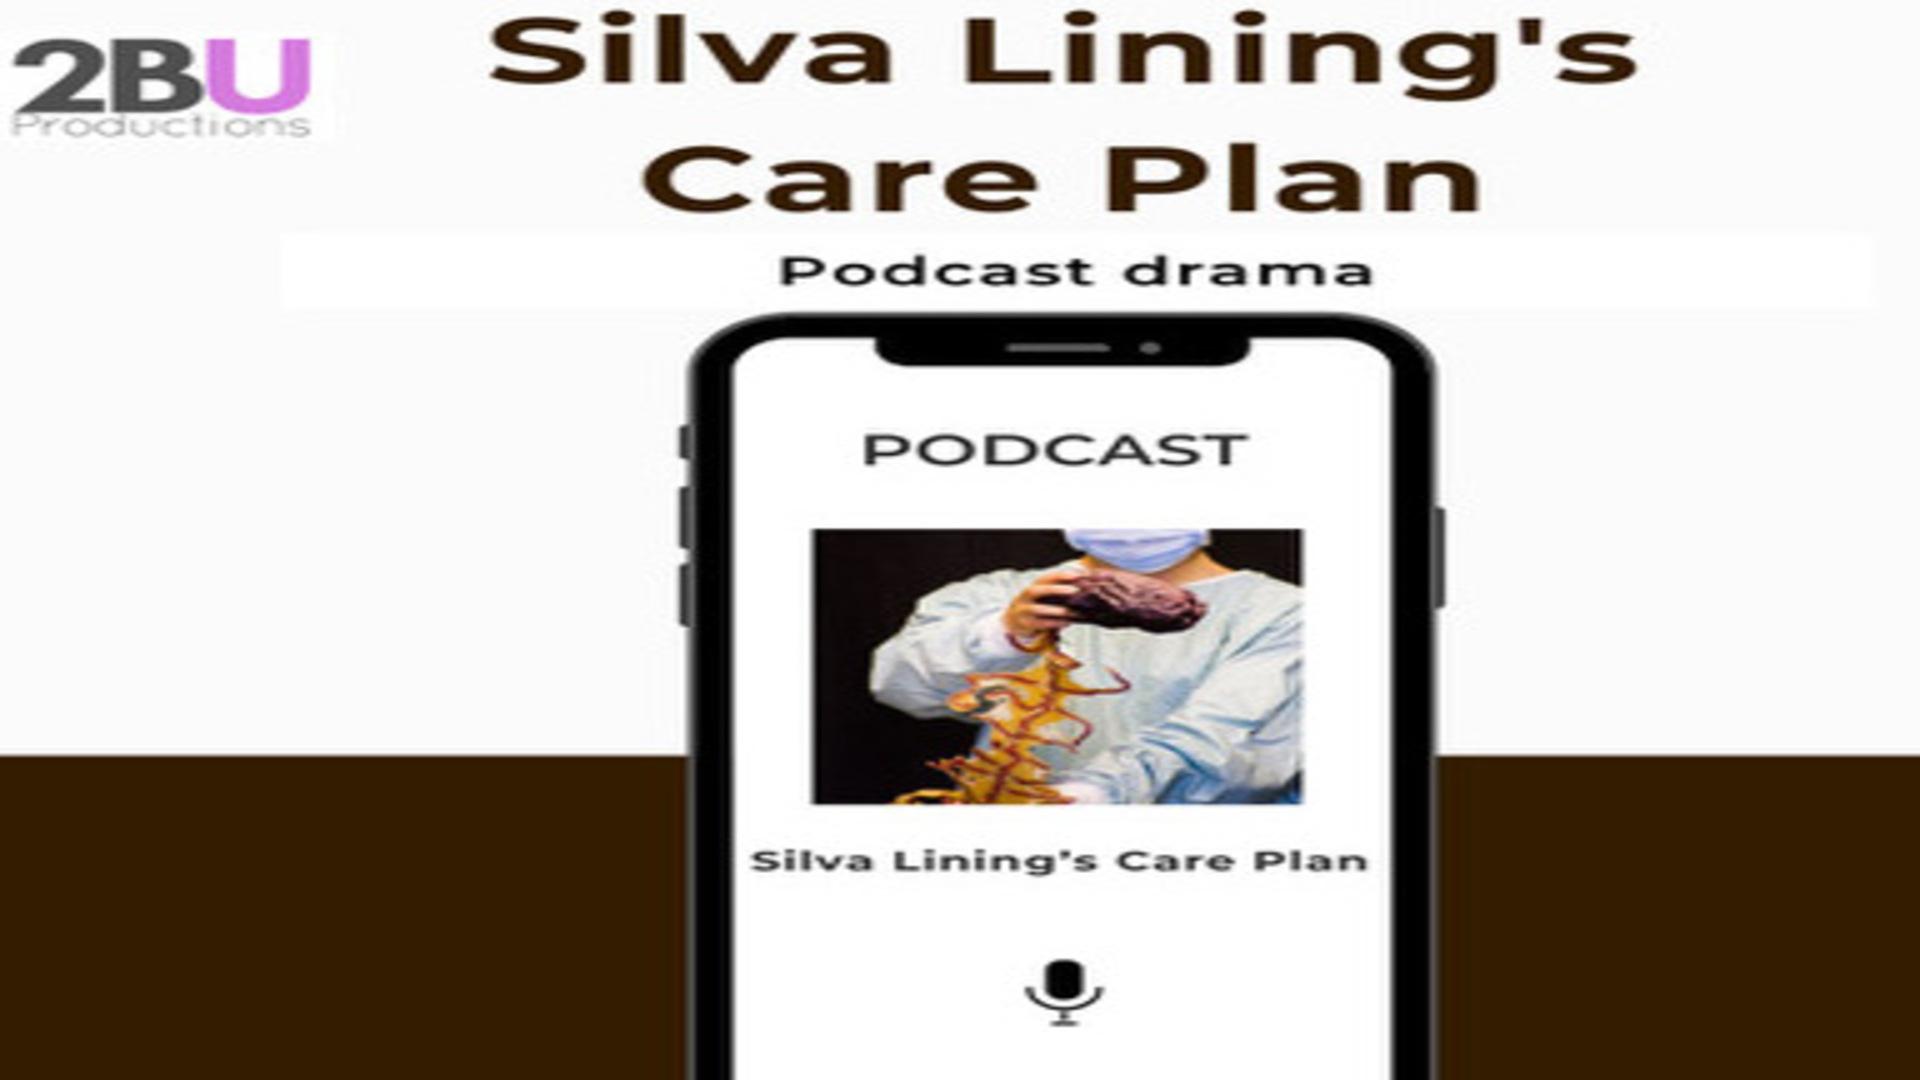 Silva Lining's Care Plan